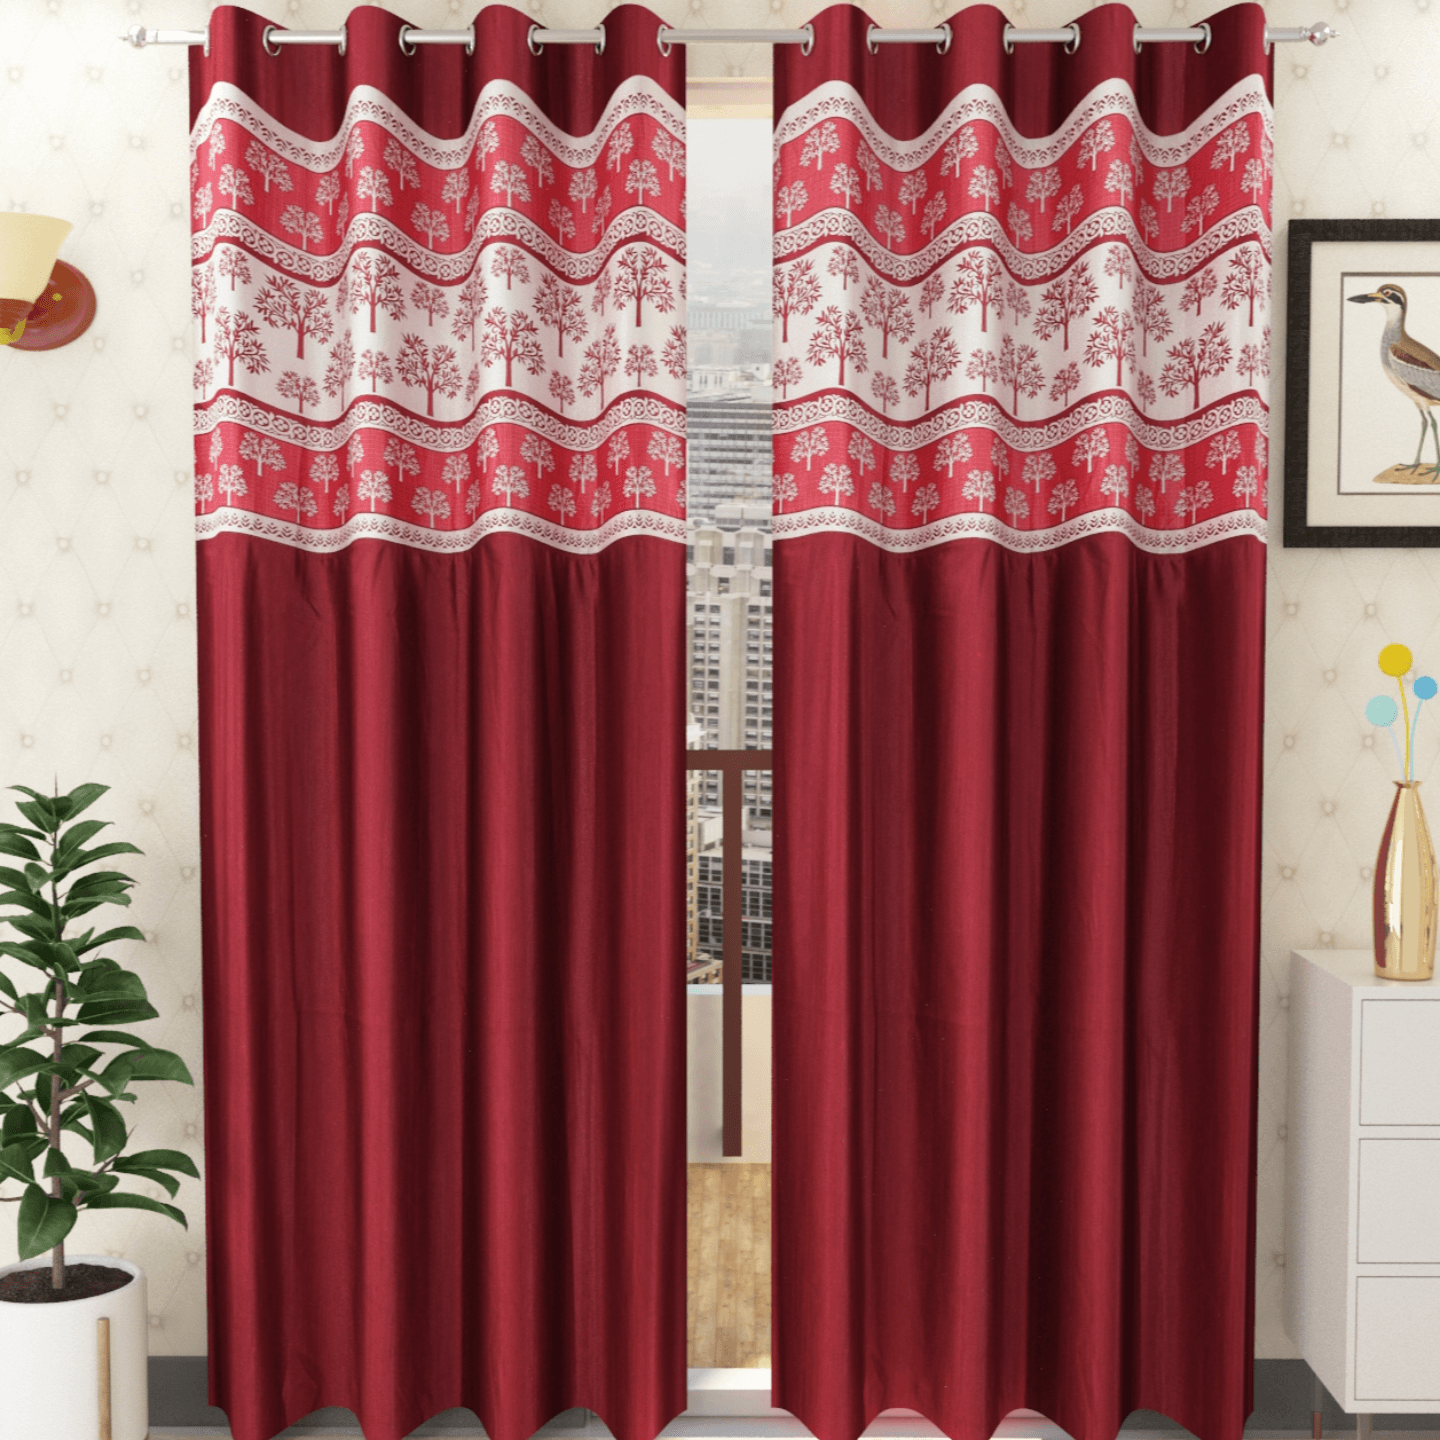 Handtex Home Tree design Patchwork curtain for door 7 feet set of 2pc Maroon color